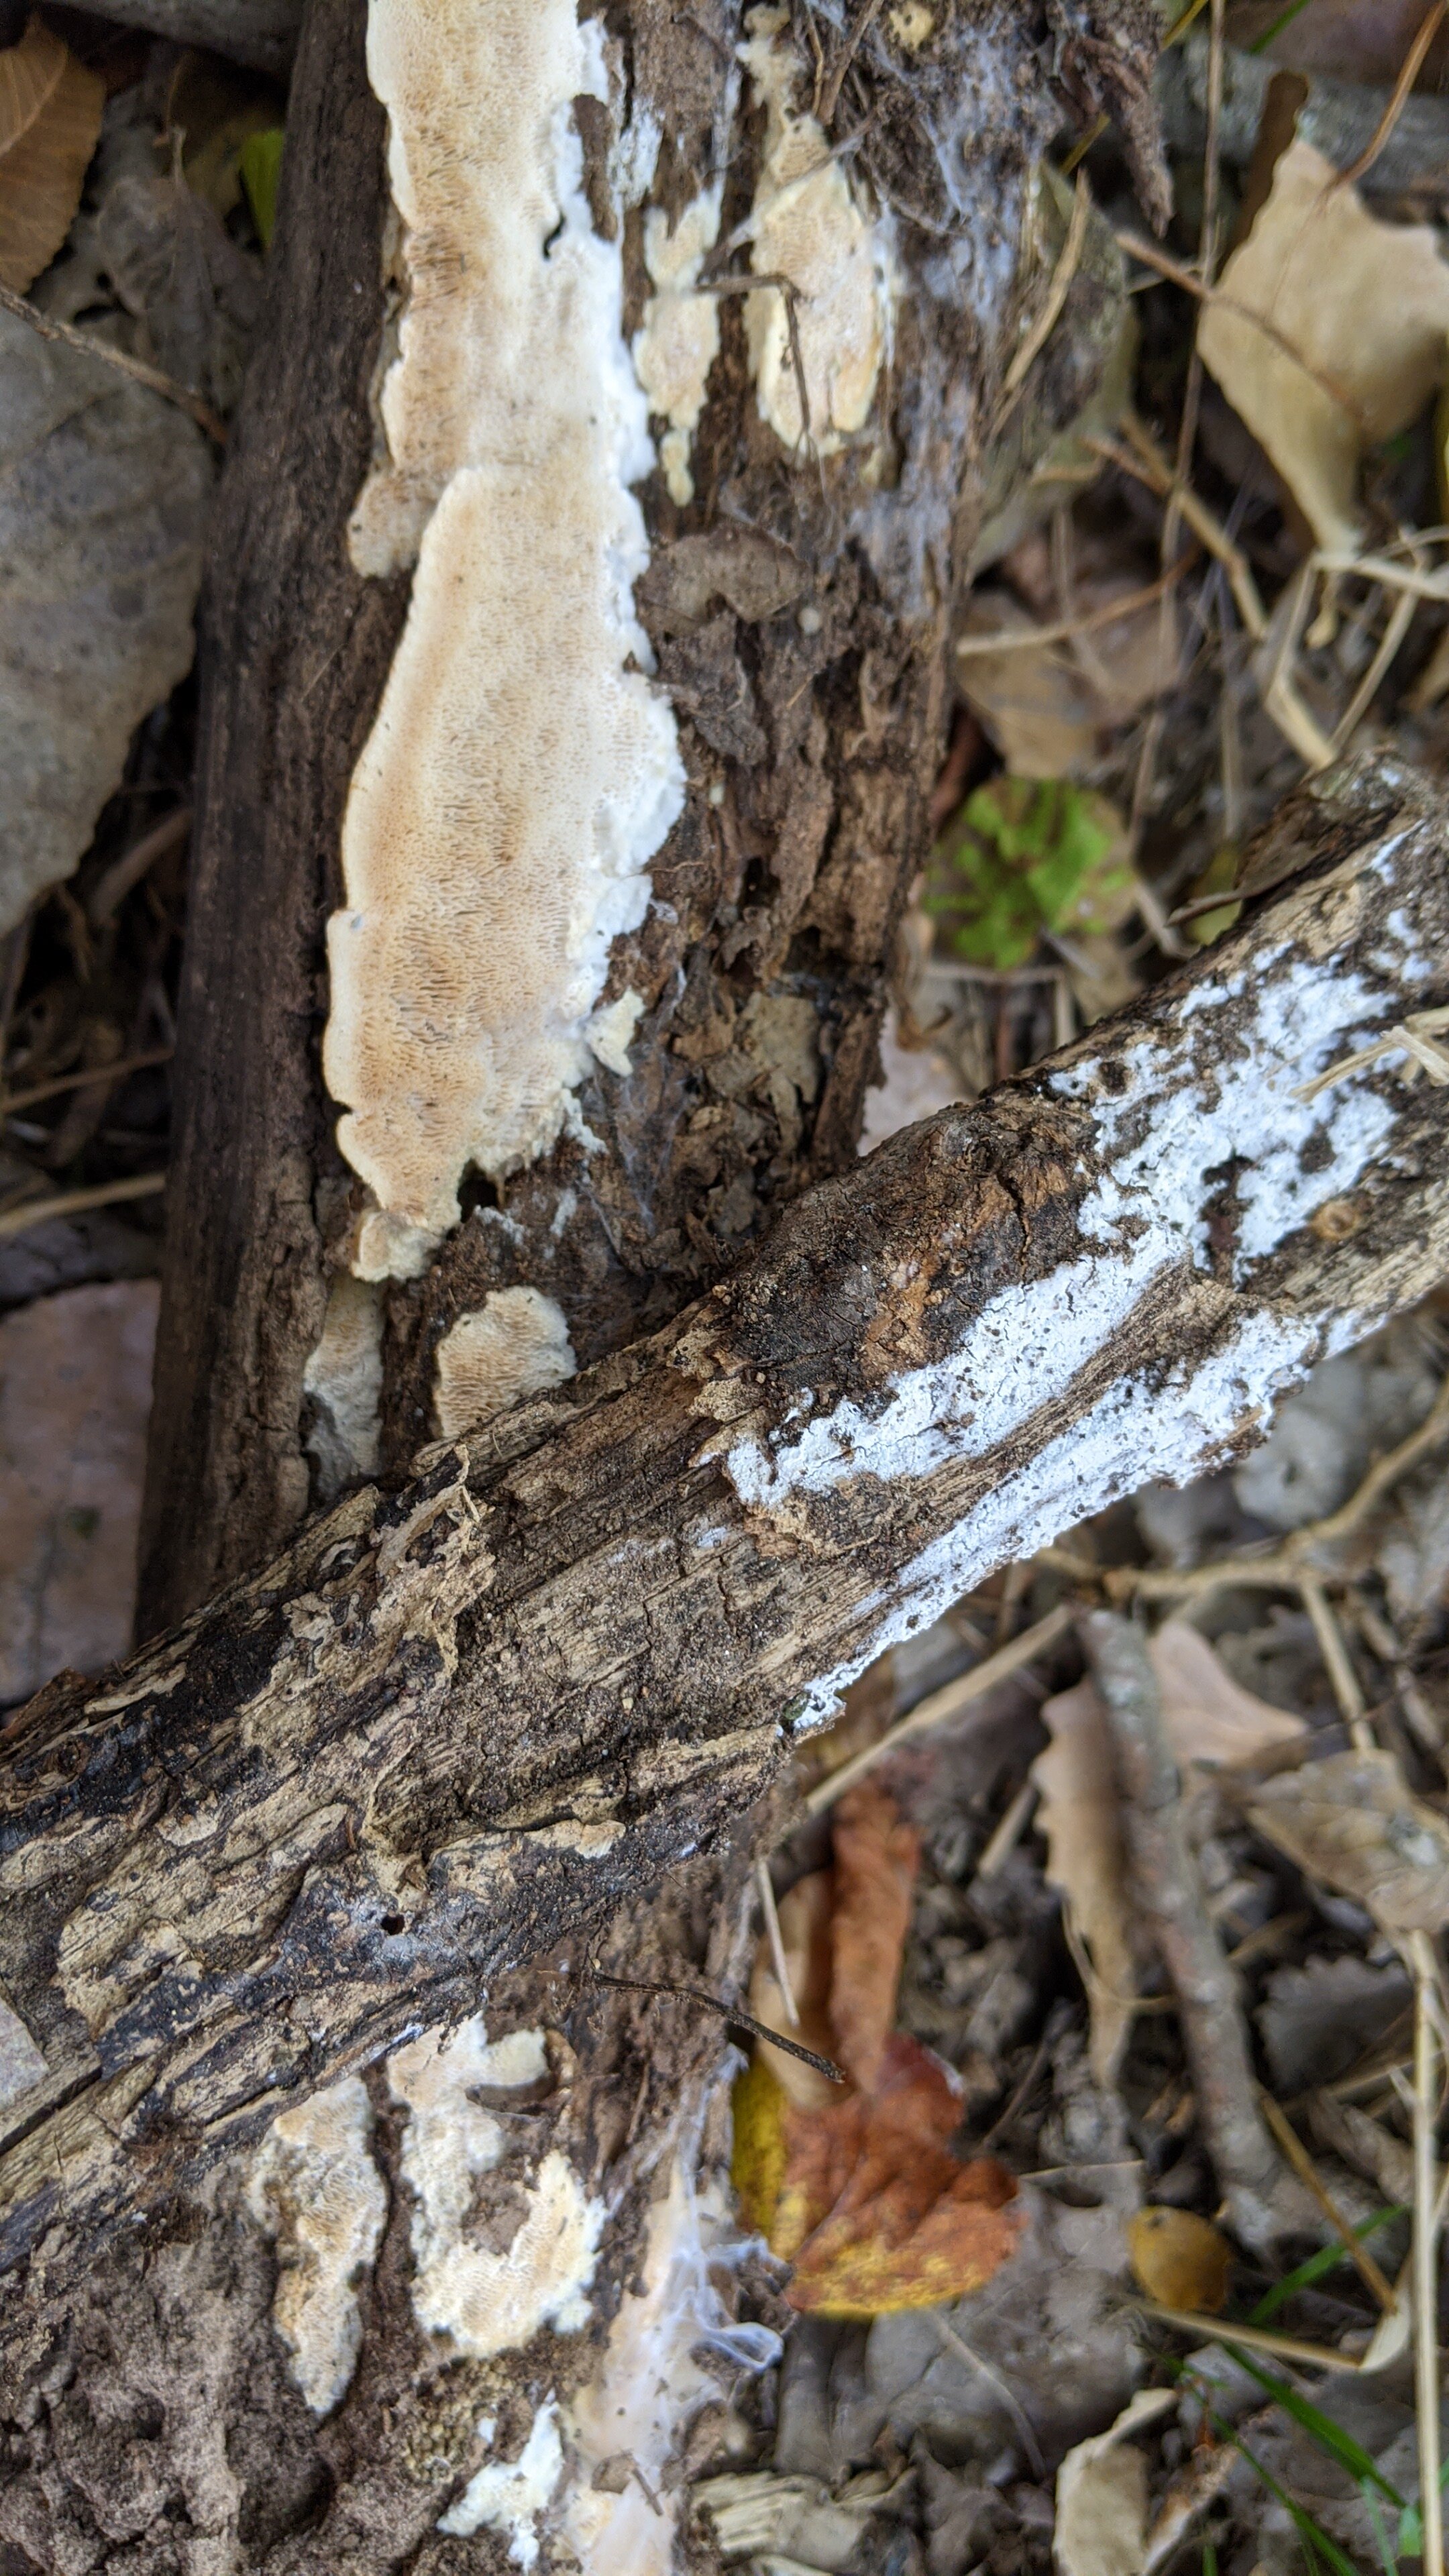 Milk-white Toothed Polypore, Irpex lacteus